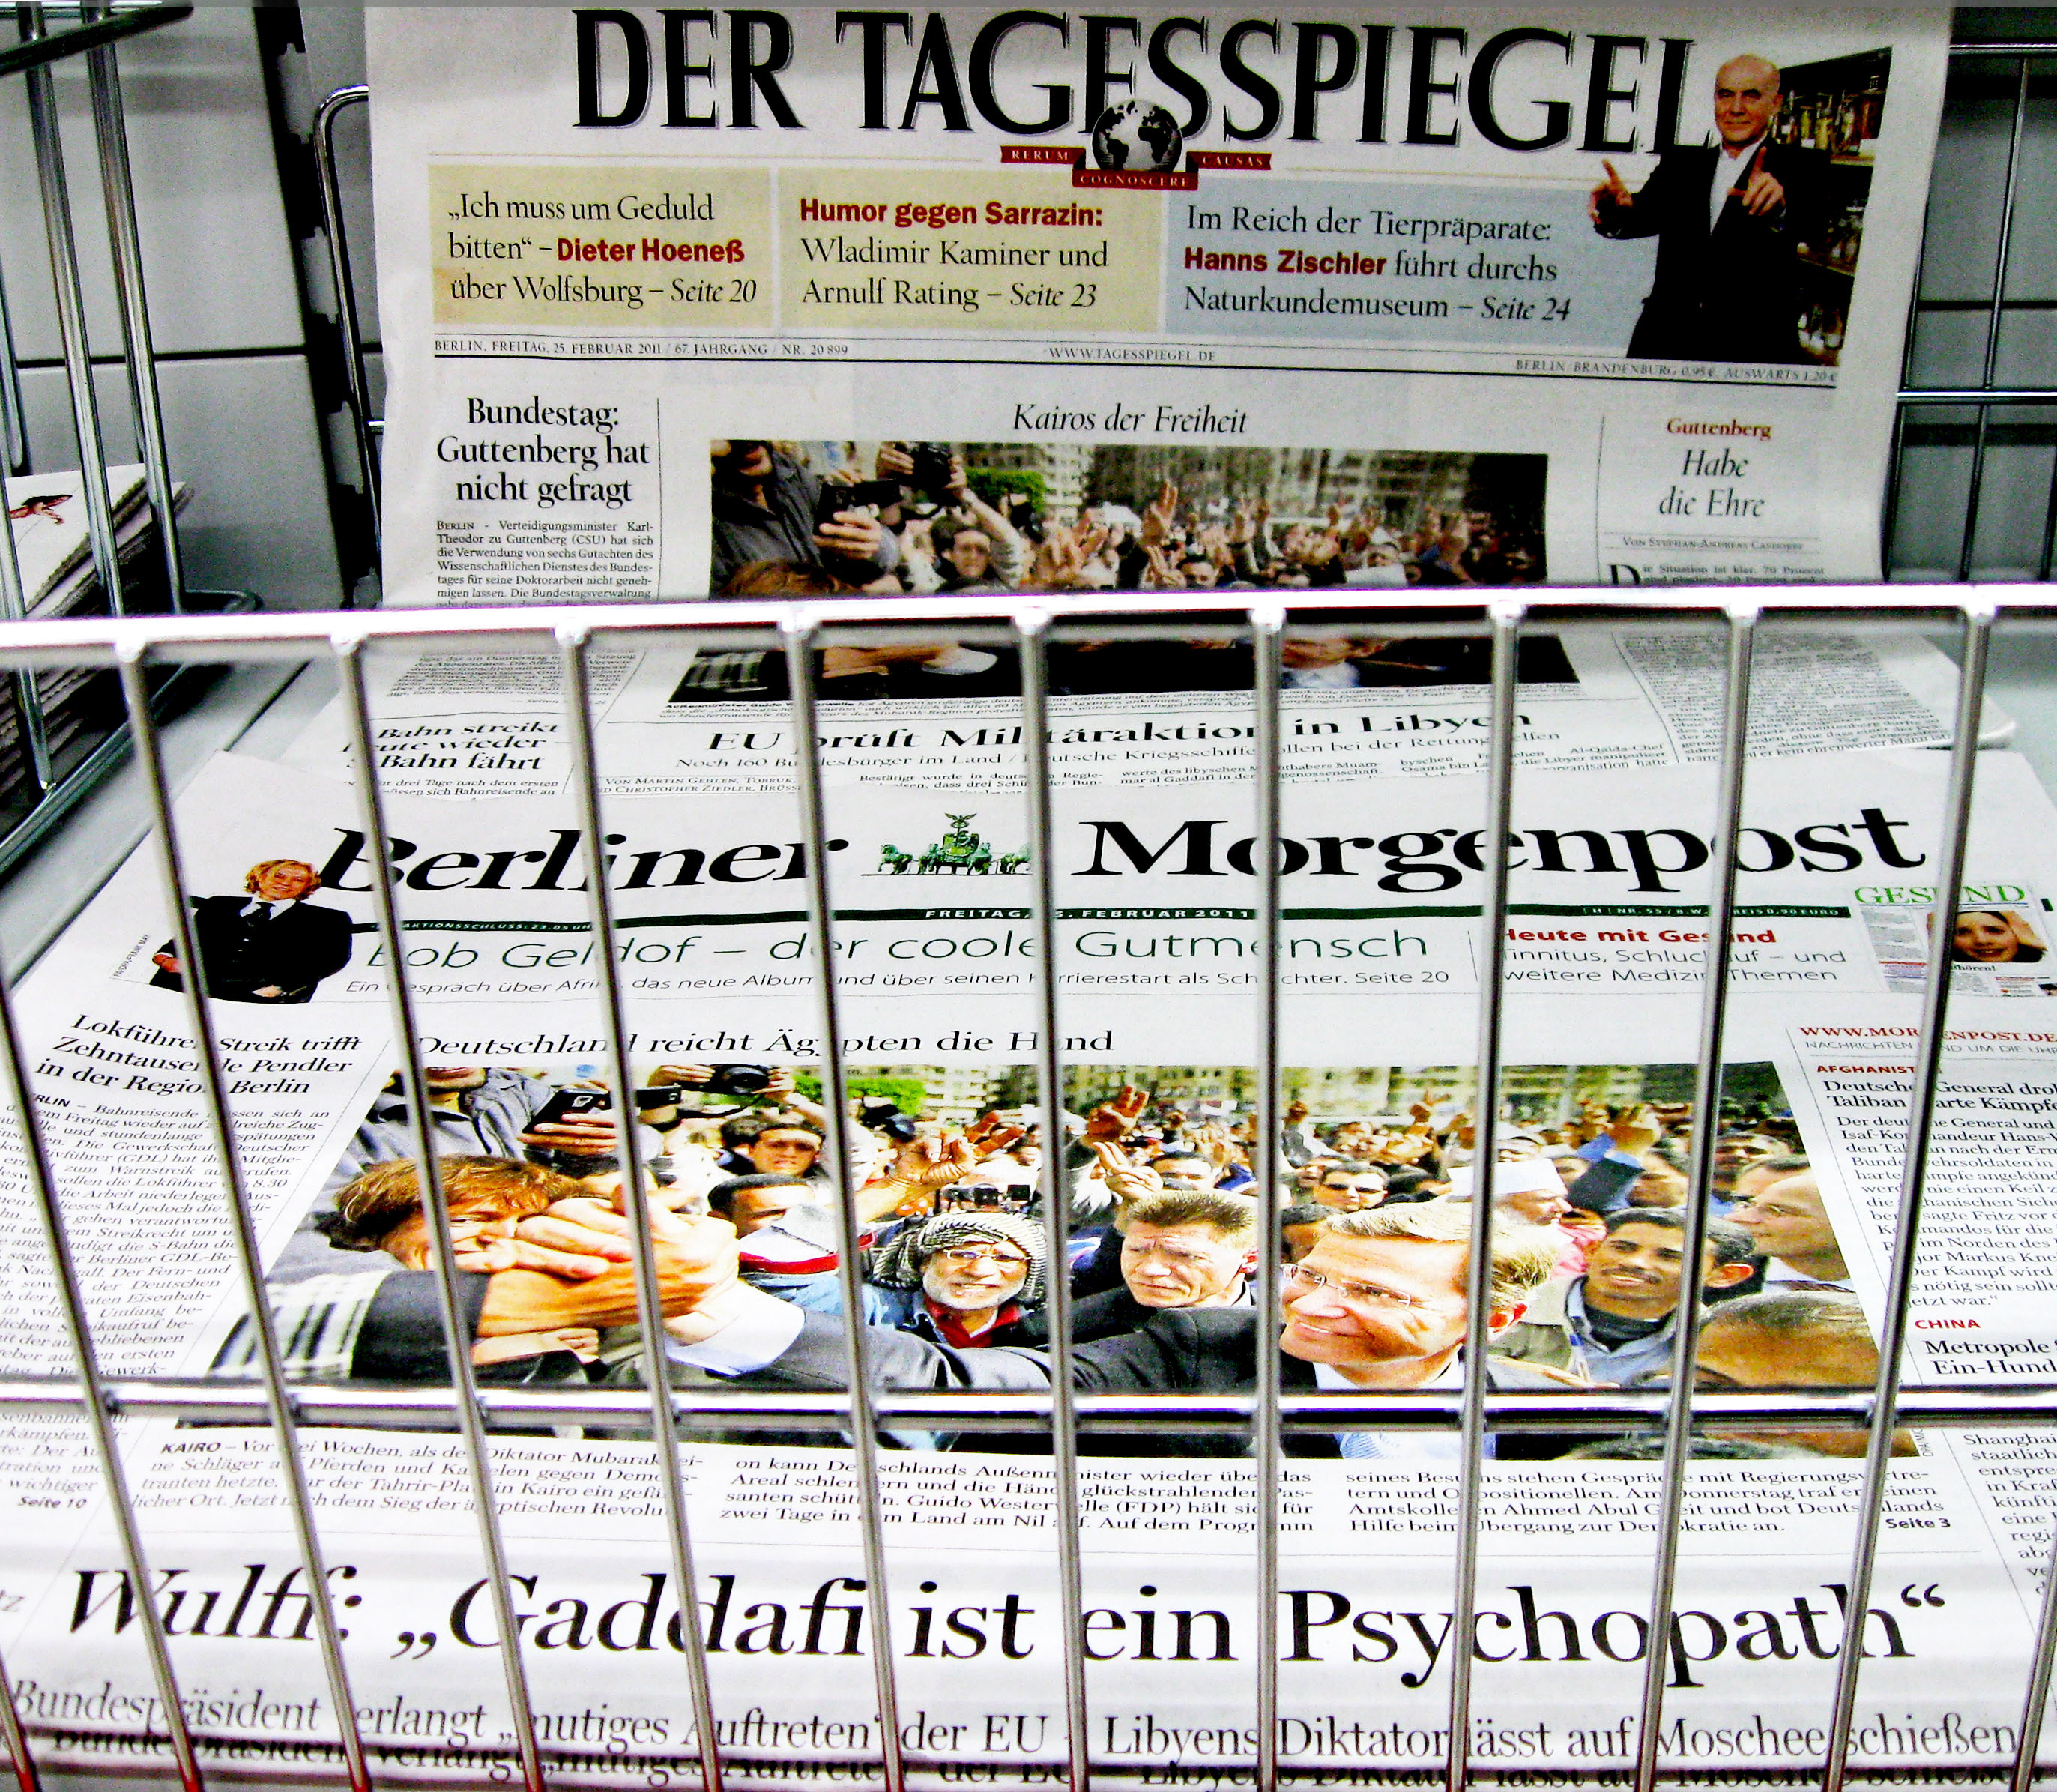 german dailies about Muammar Gaddafi - behind newspaper box bars (23rd February 2011)